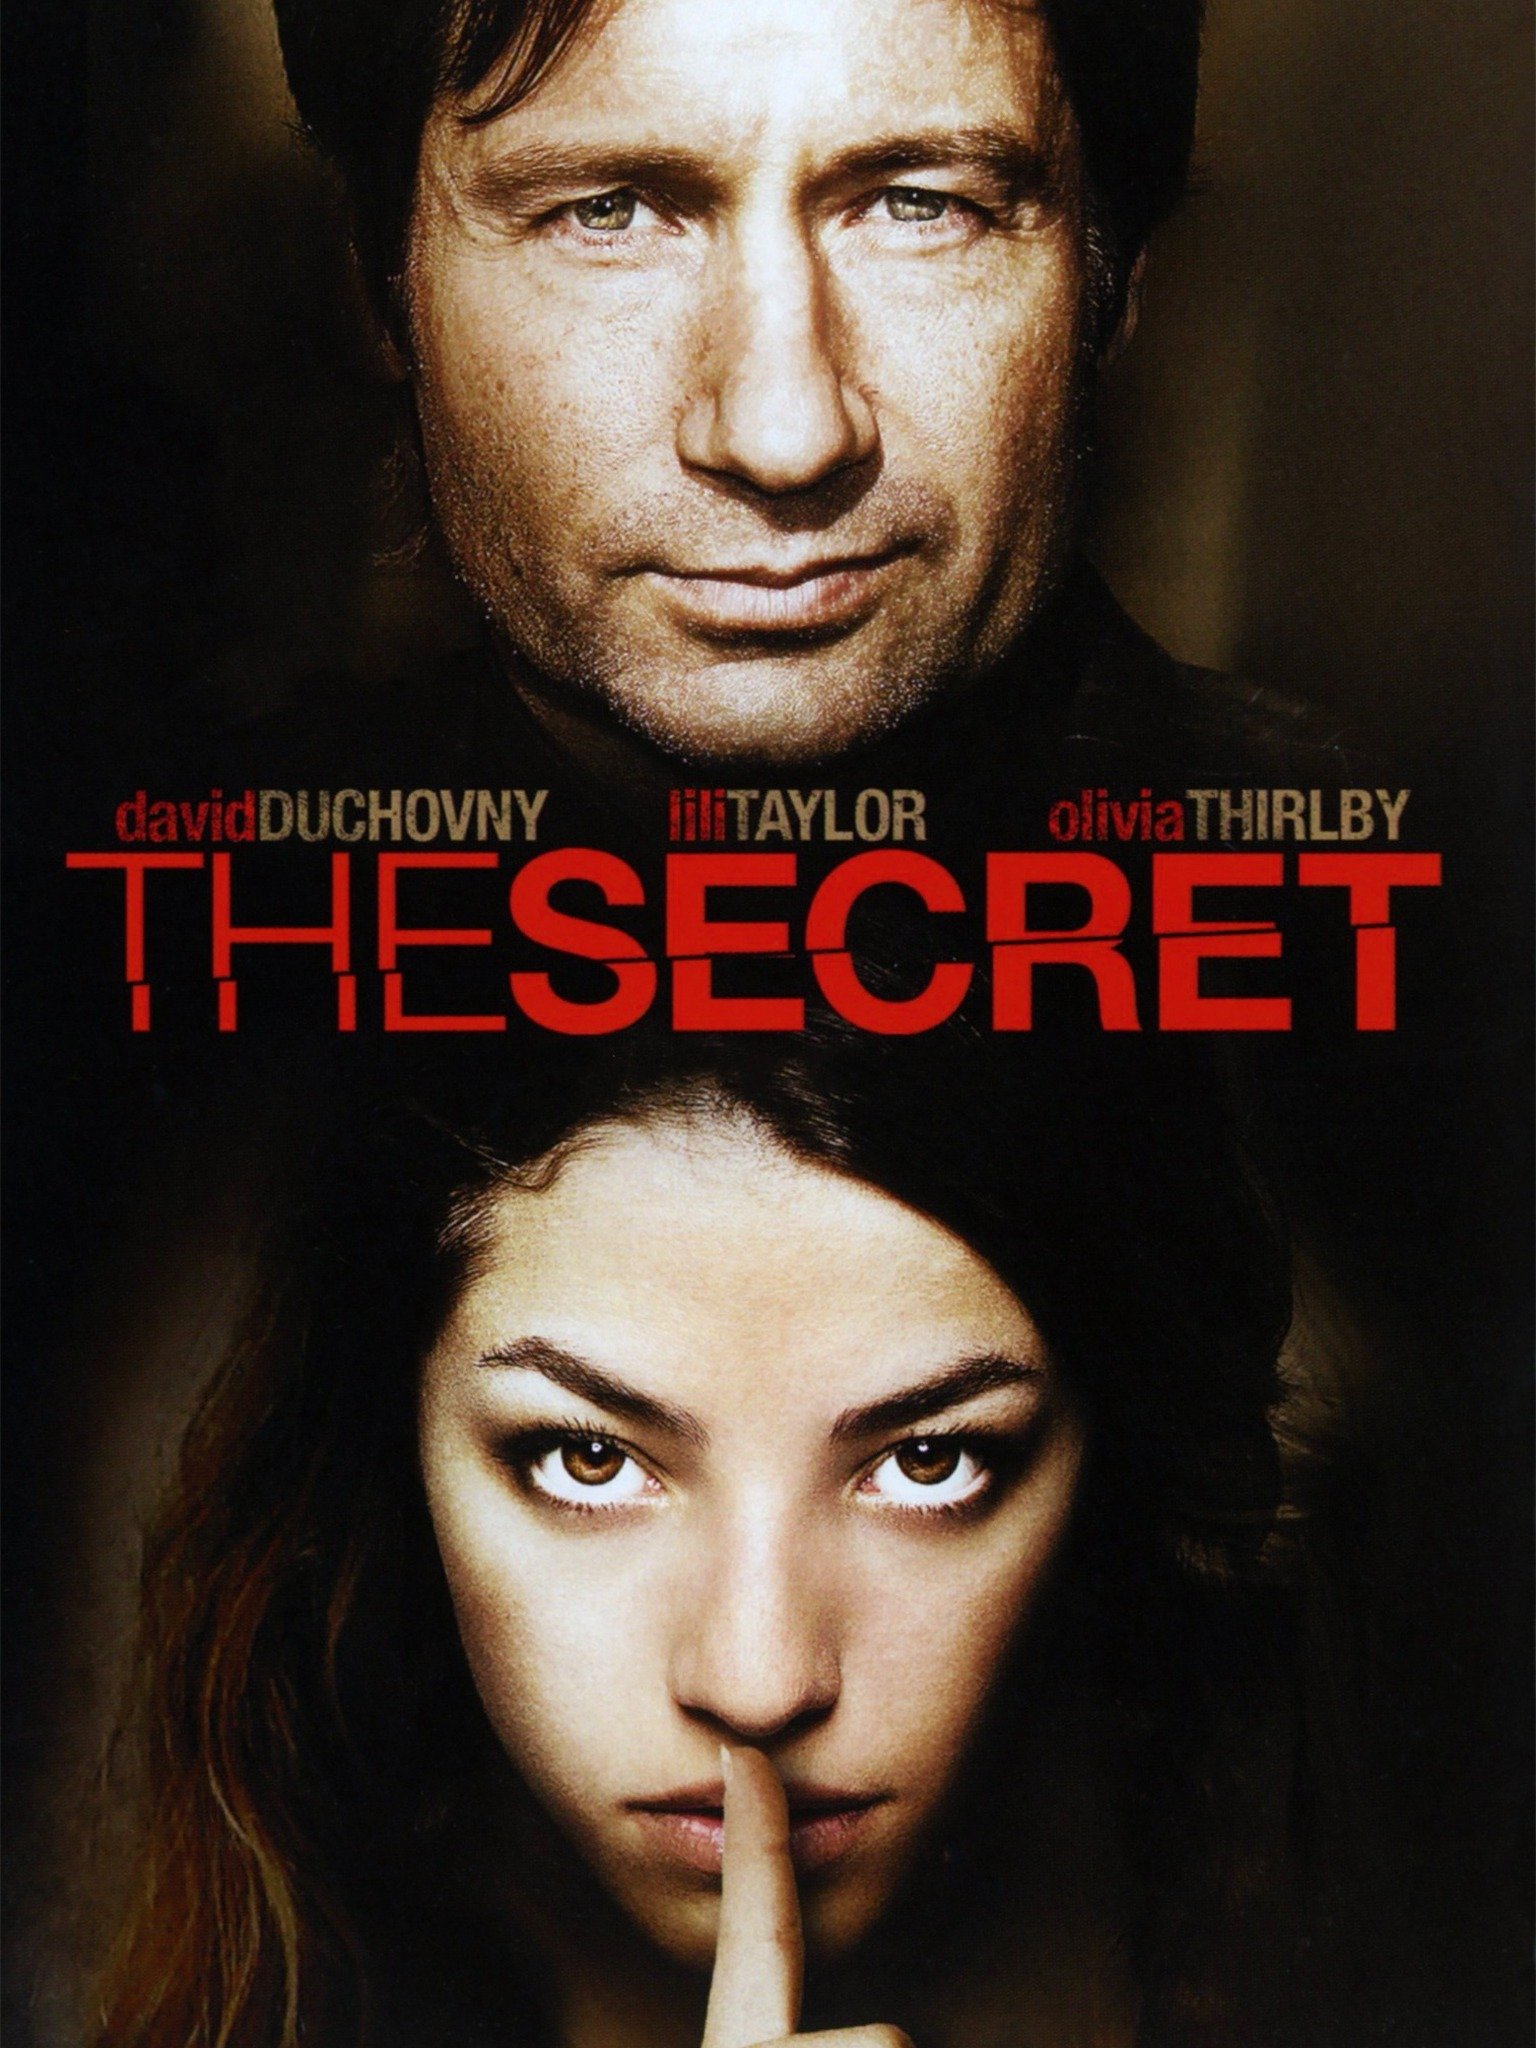 The Secret (2006) Hindi Dubbed